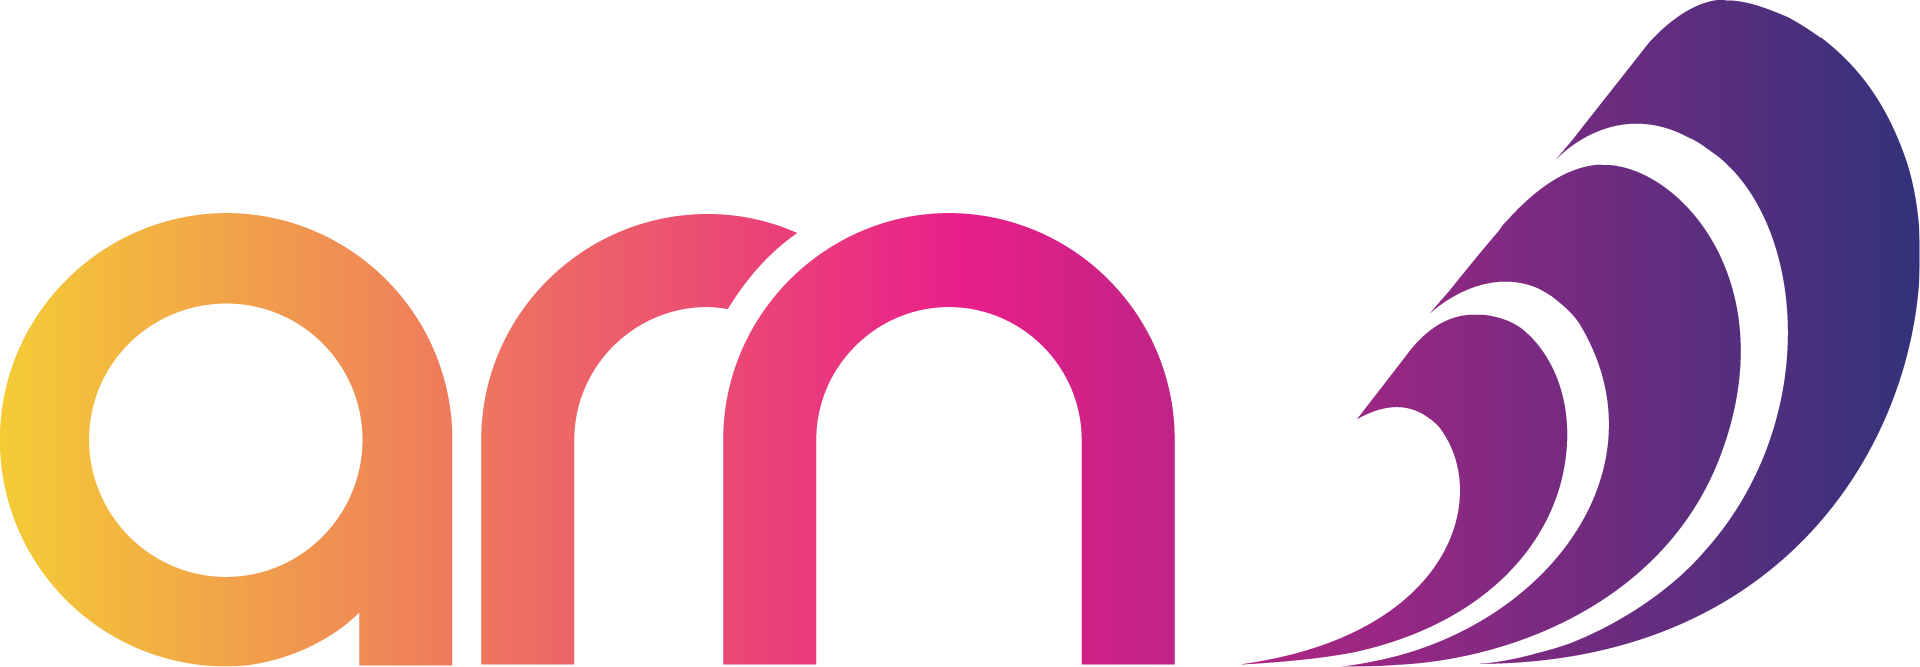 australian-radio-network-logo-01